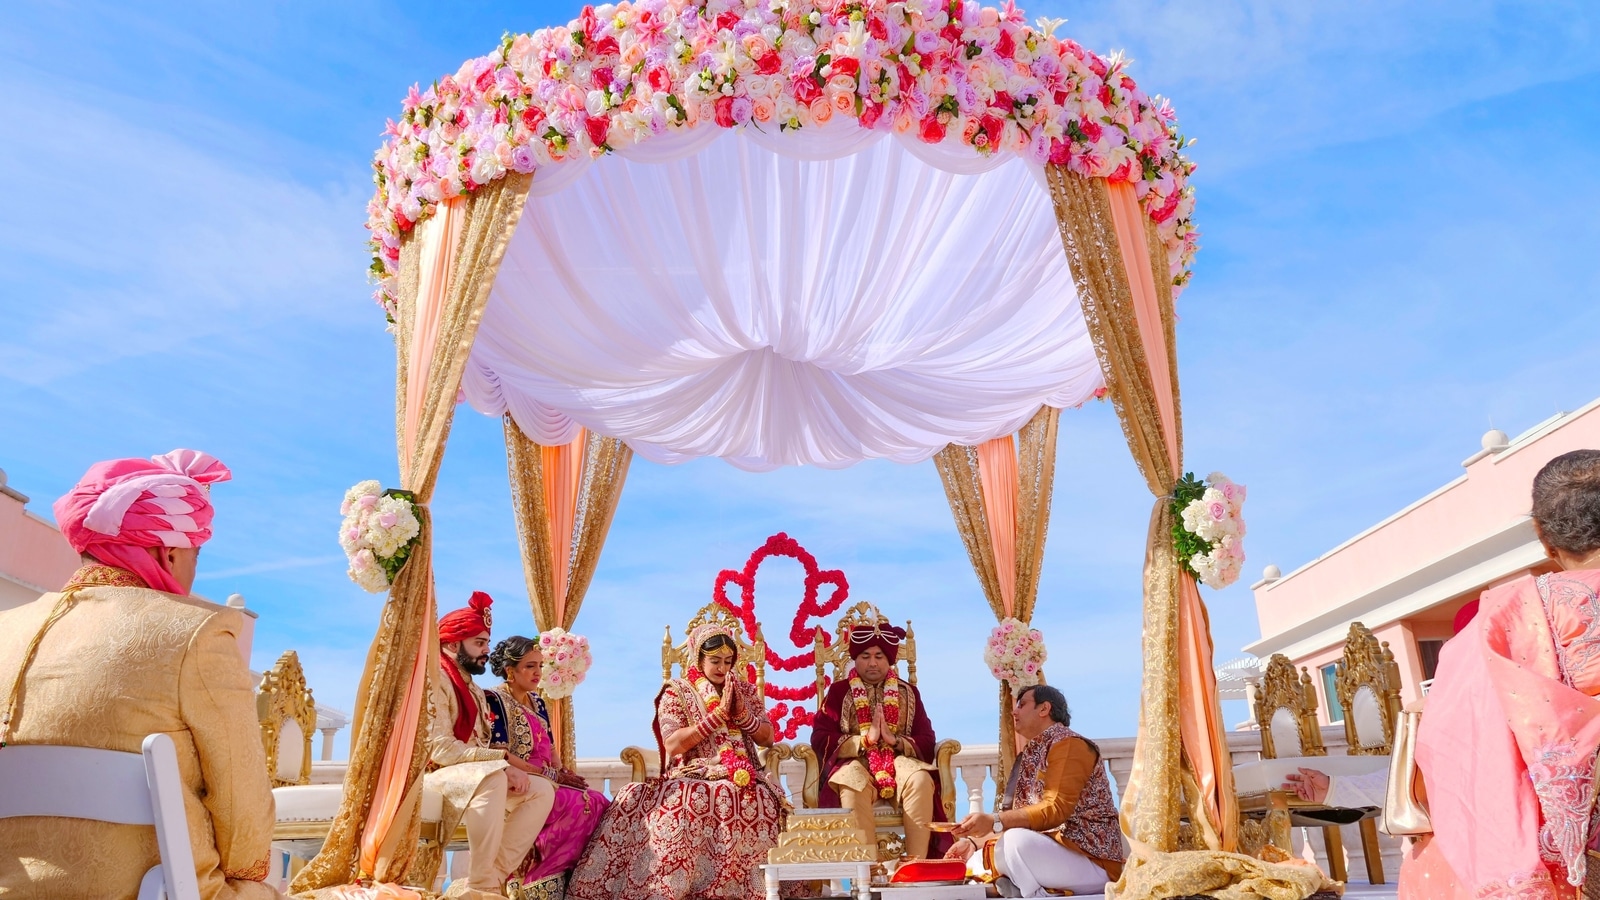 5 latest trendy wedding decor ideas from across India